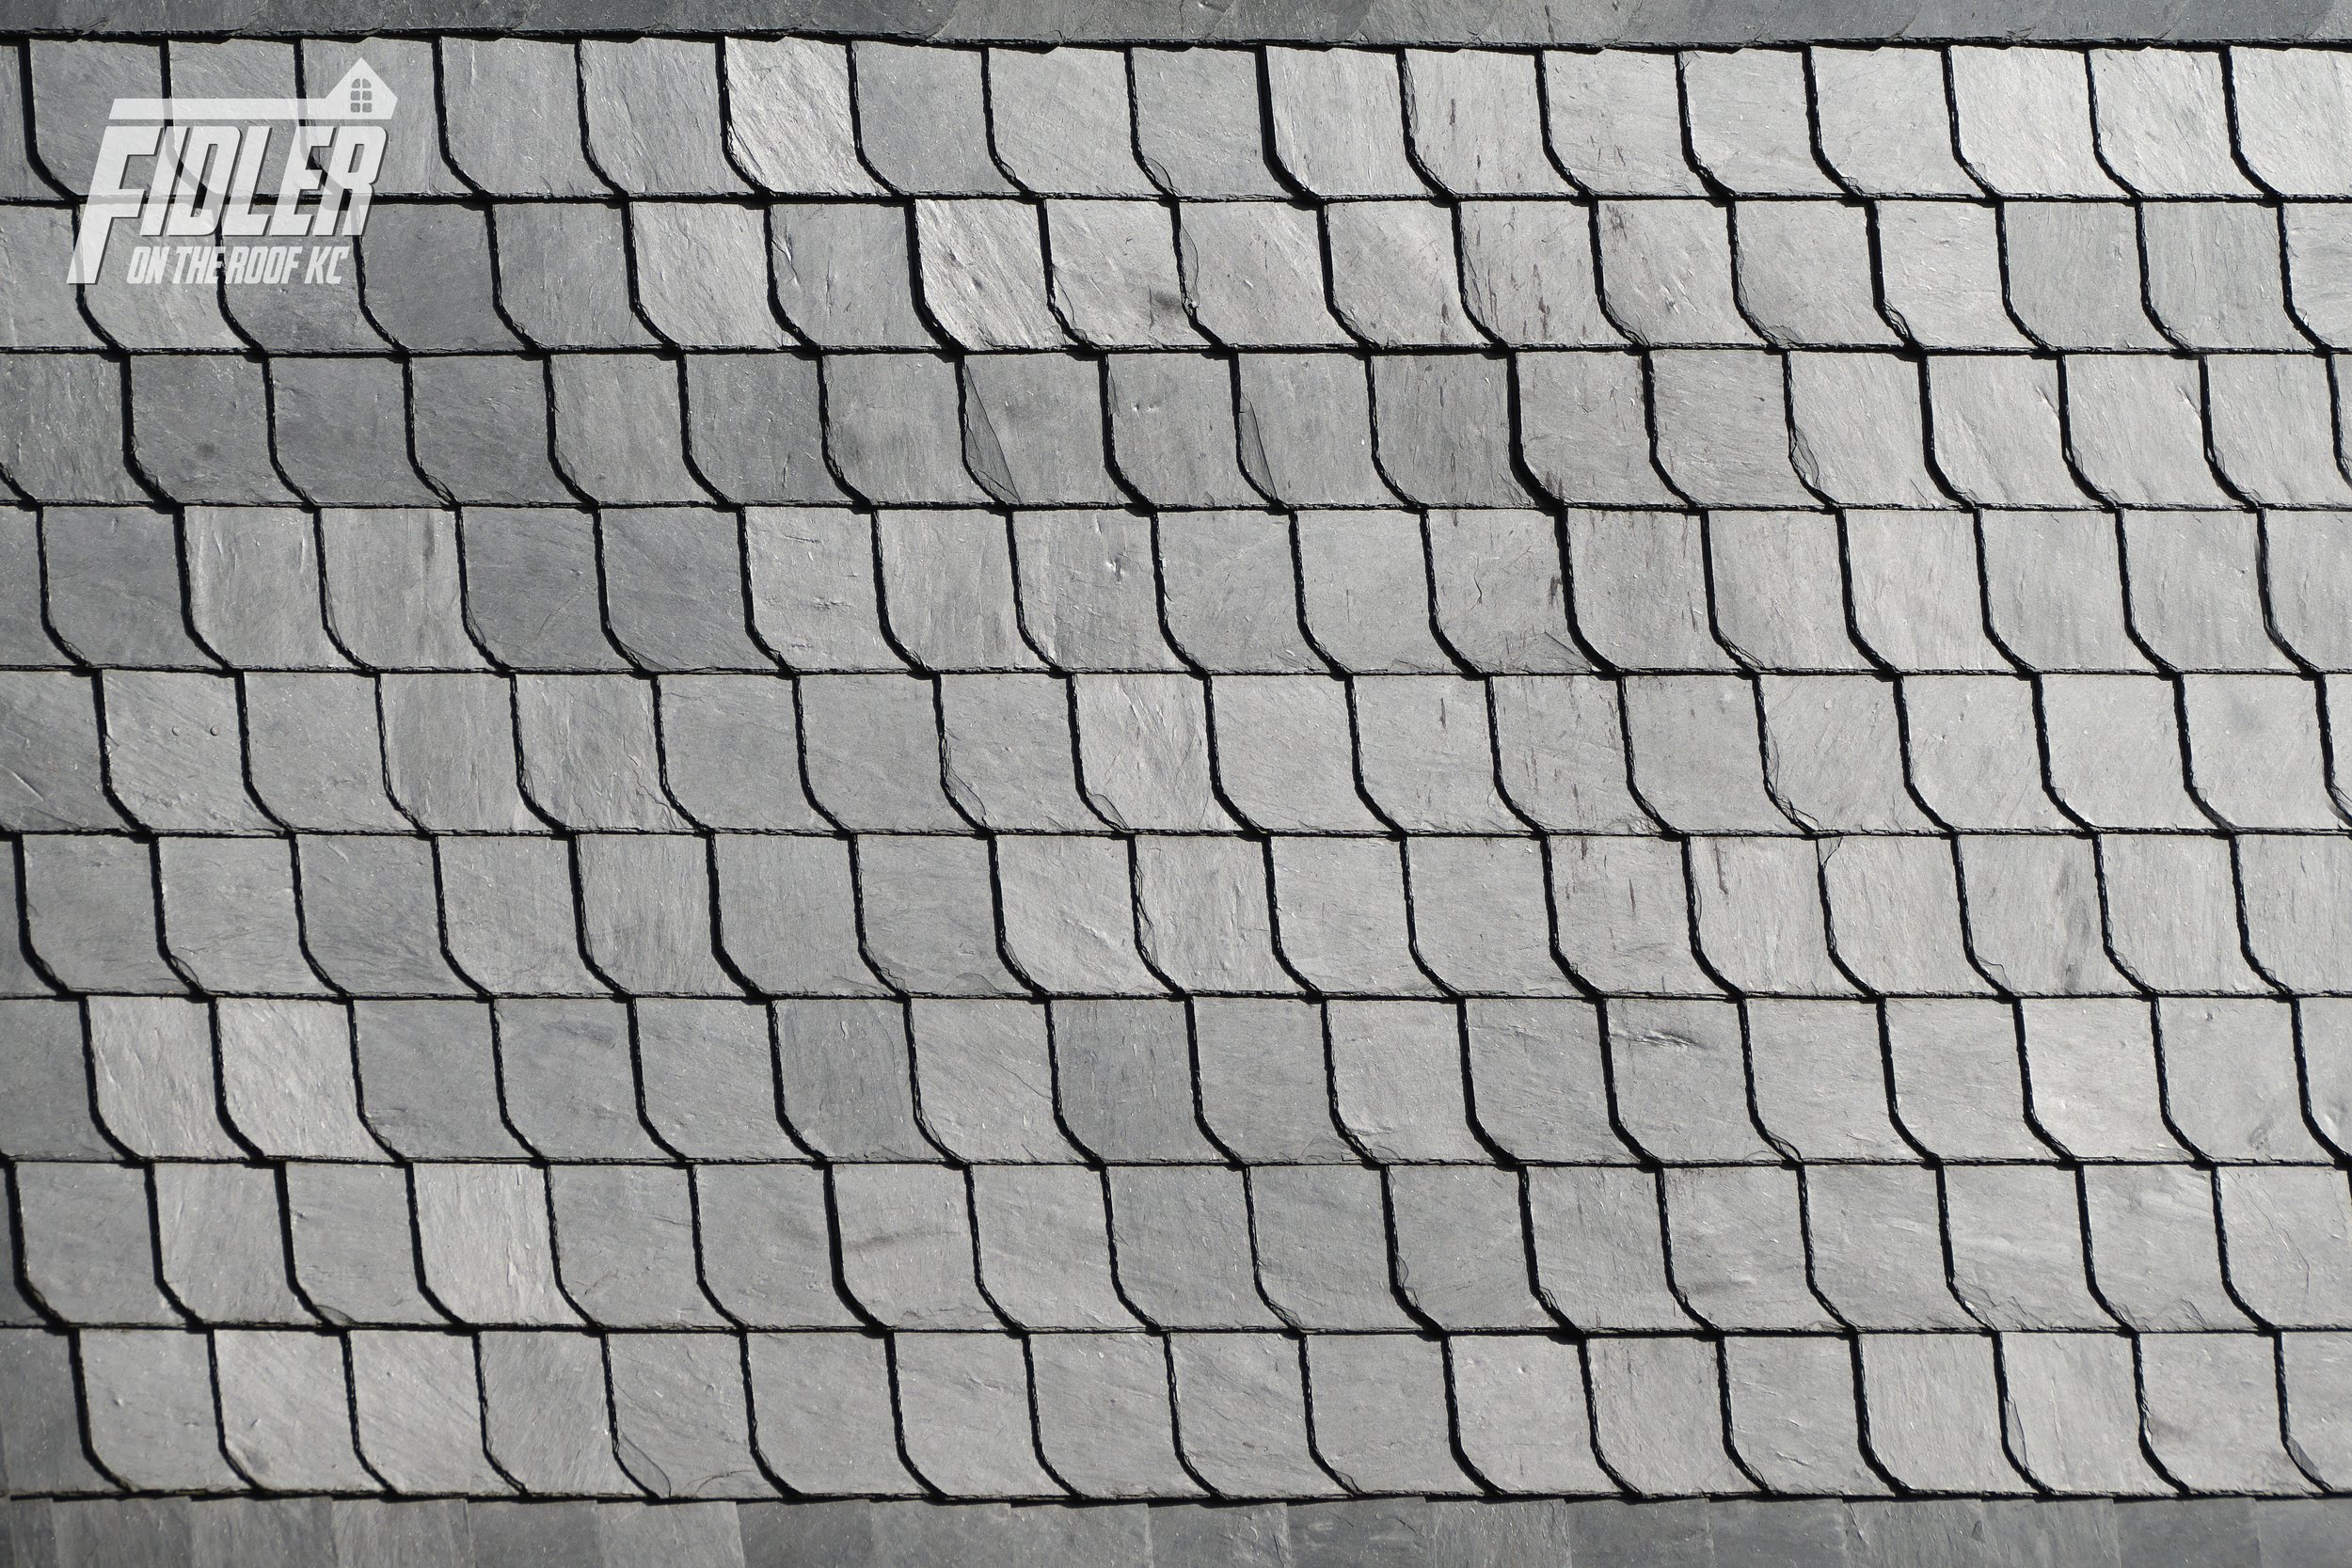 Slate Tile Roofing by Fidler on the Roof KC.jpg